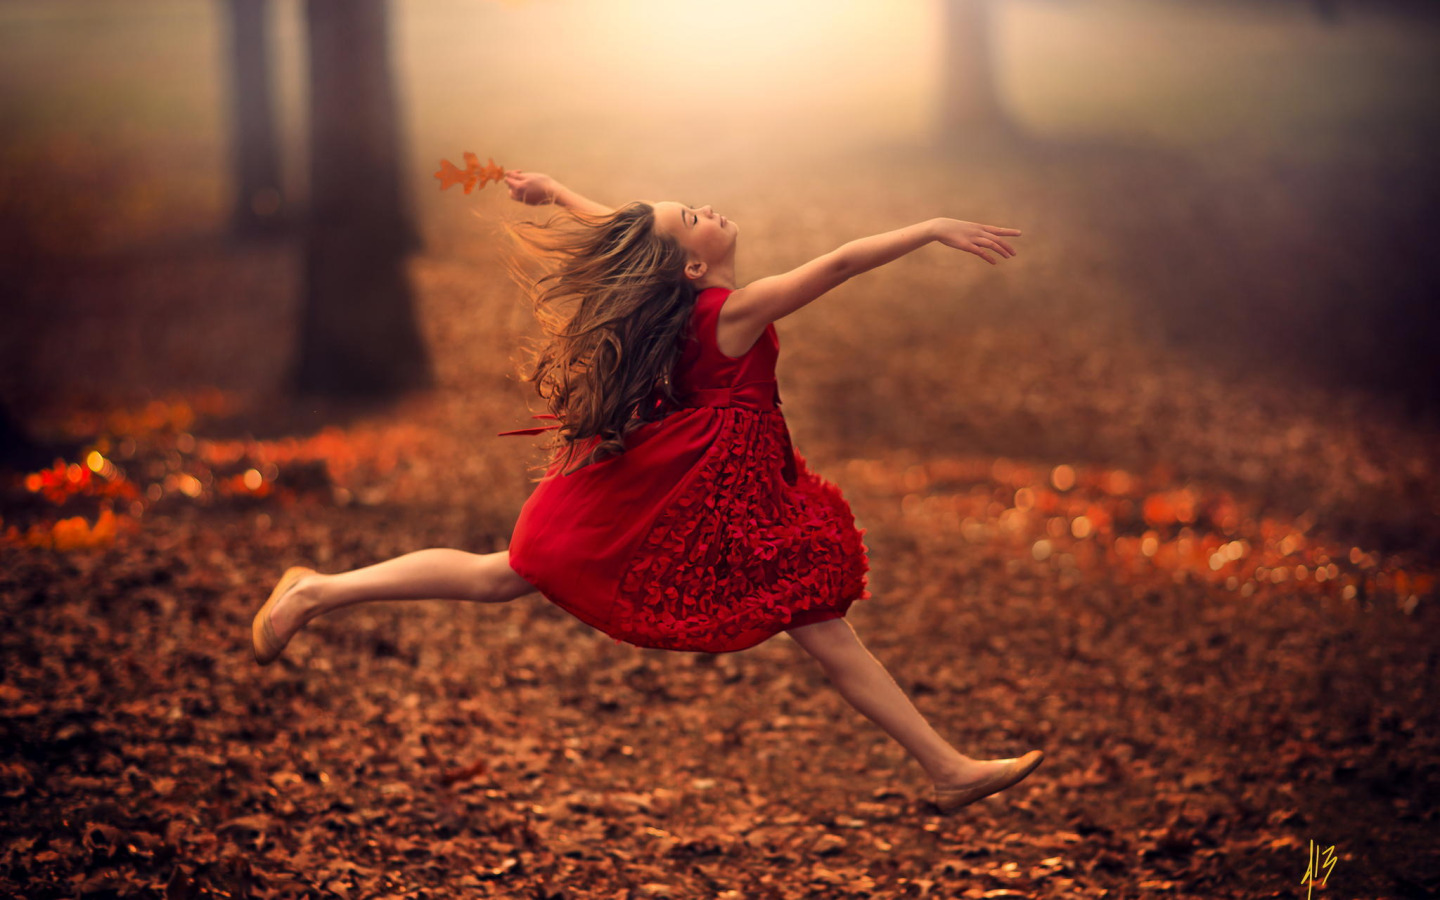 Джейк Олсон (Jake Olson), США. Девушка танцует. Девушка бежит в платье. Девушка танцует осень.